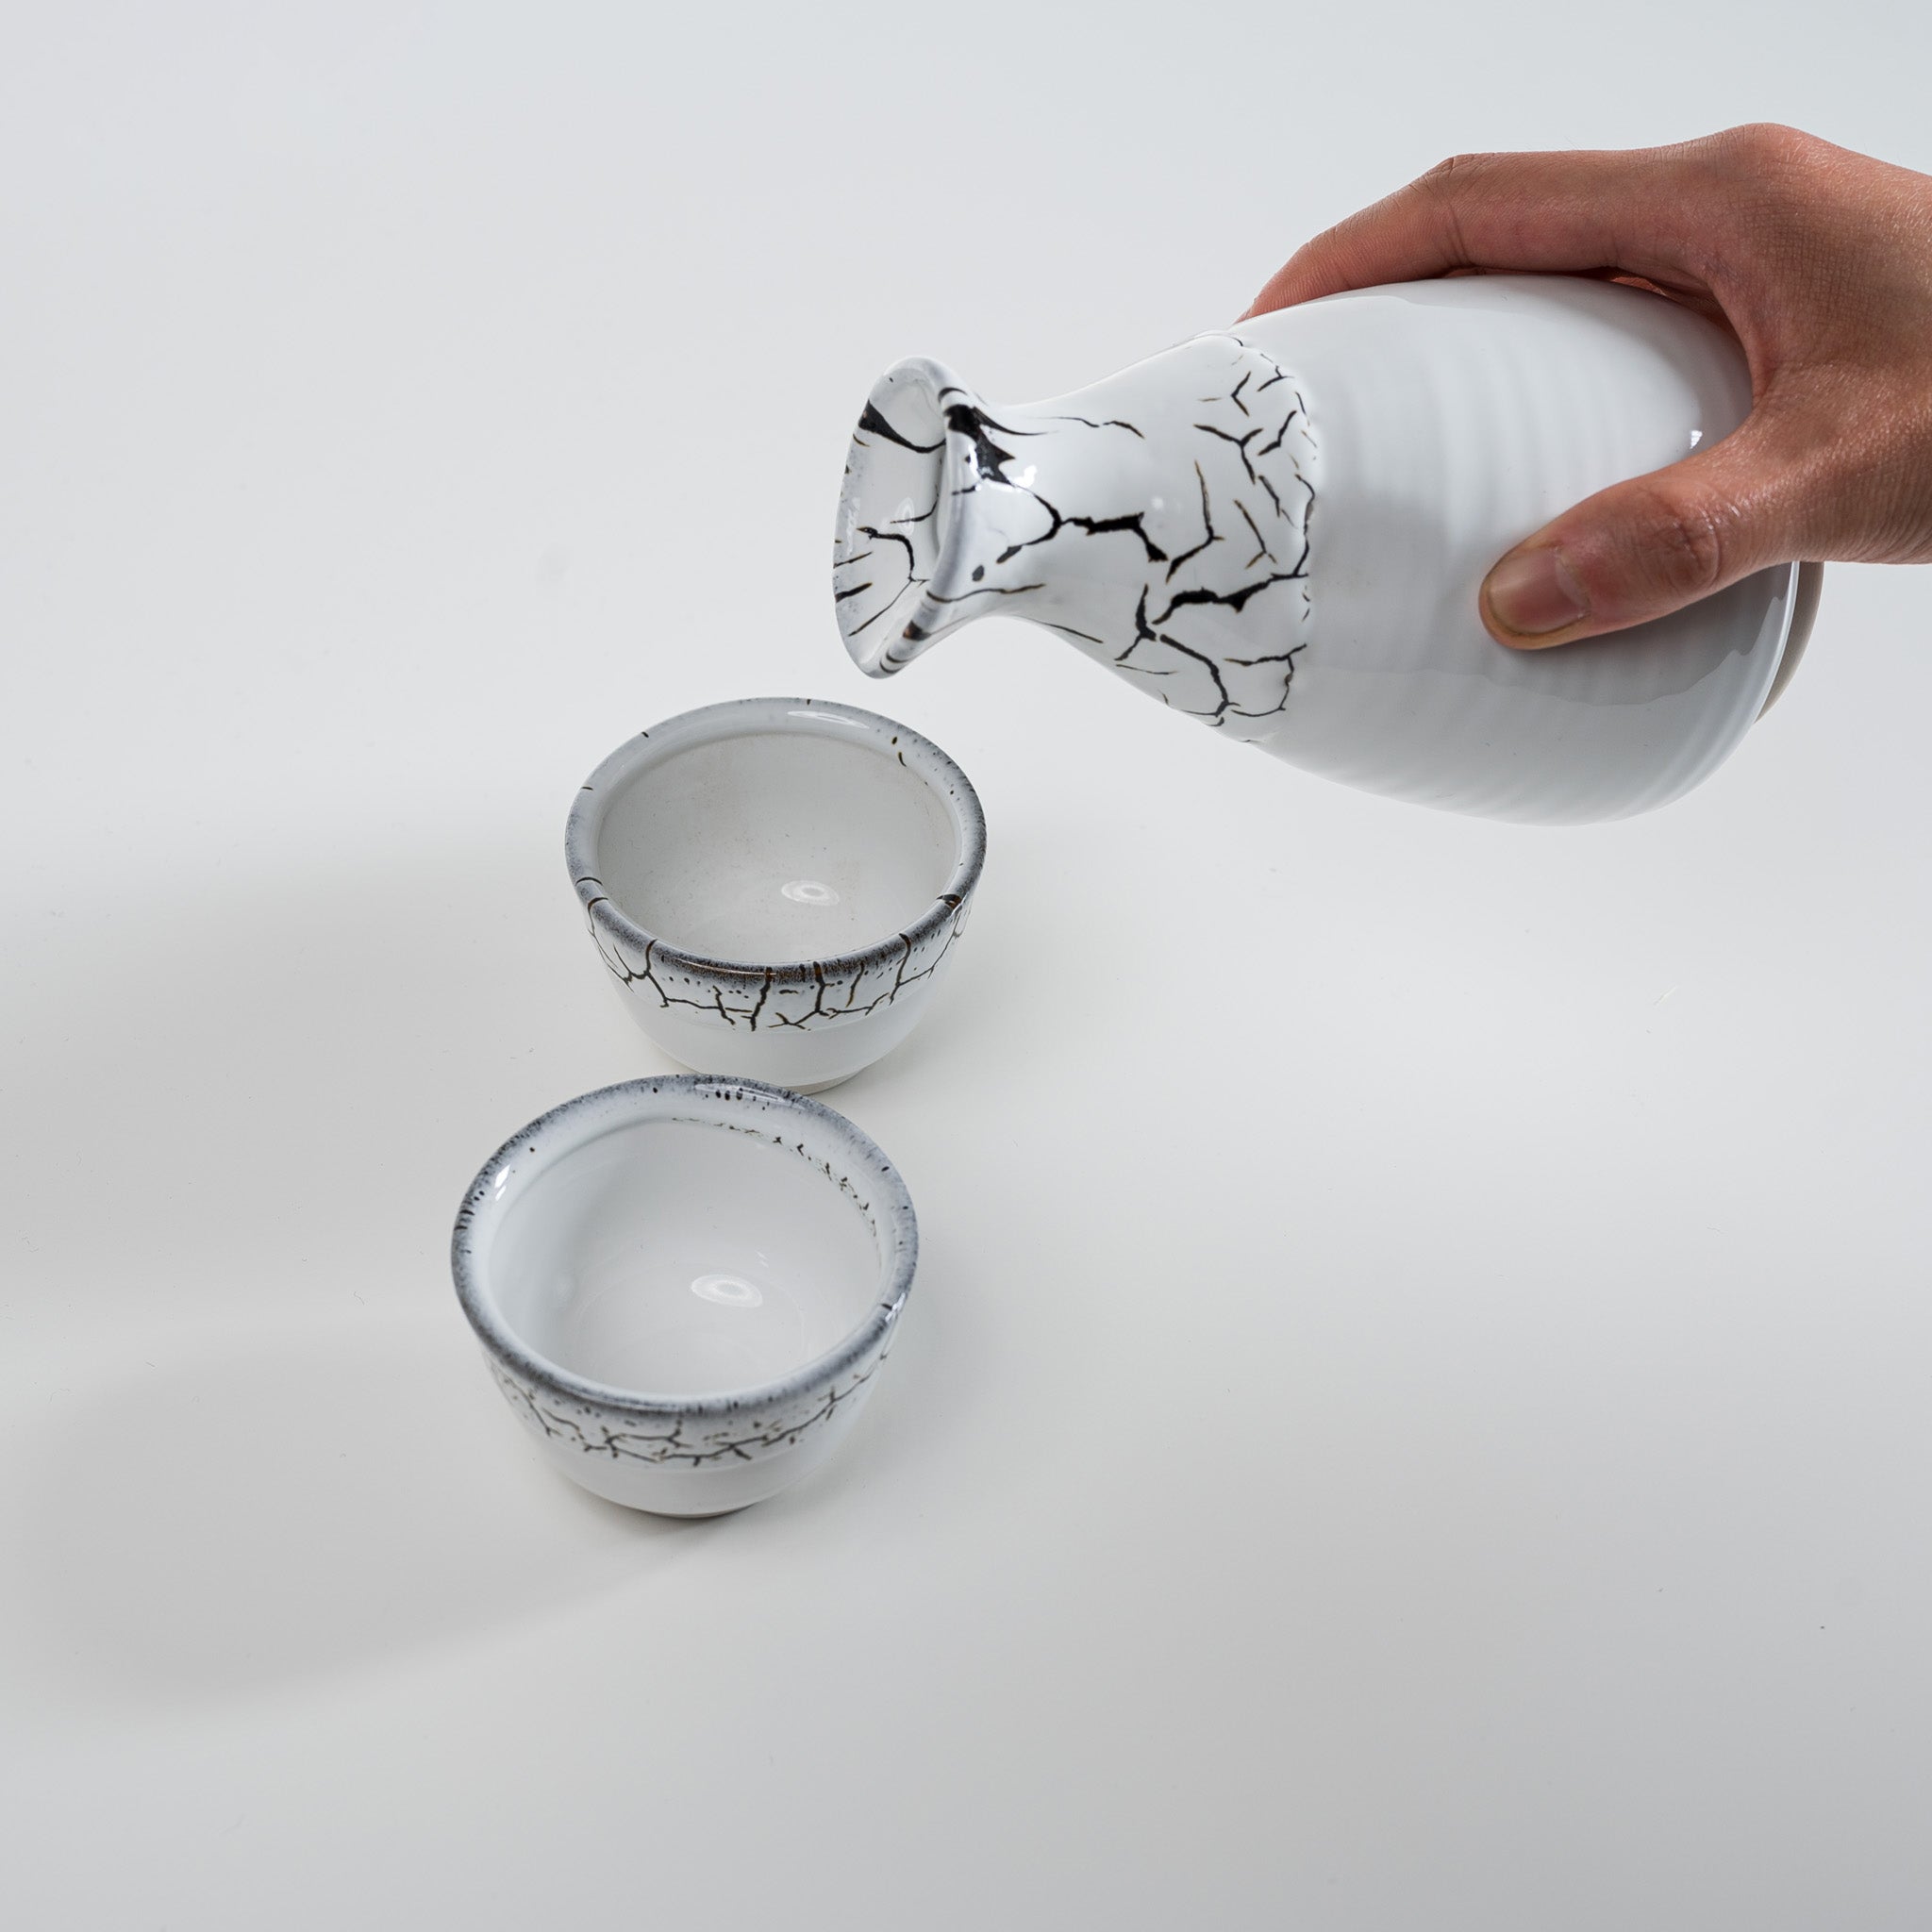 Mino ware Pottery Sake Set - White Thunder / やまい伊藤 酒器セット